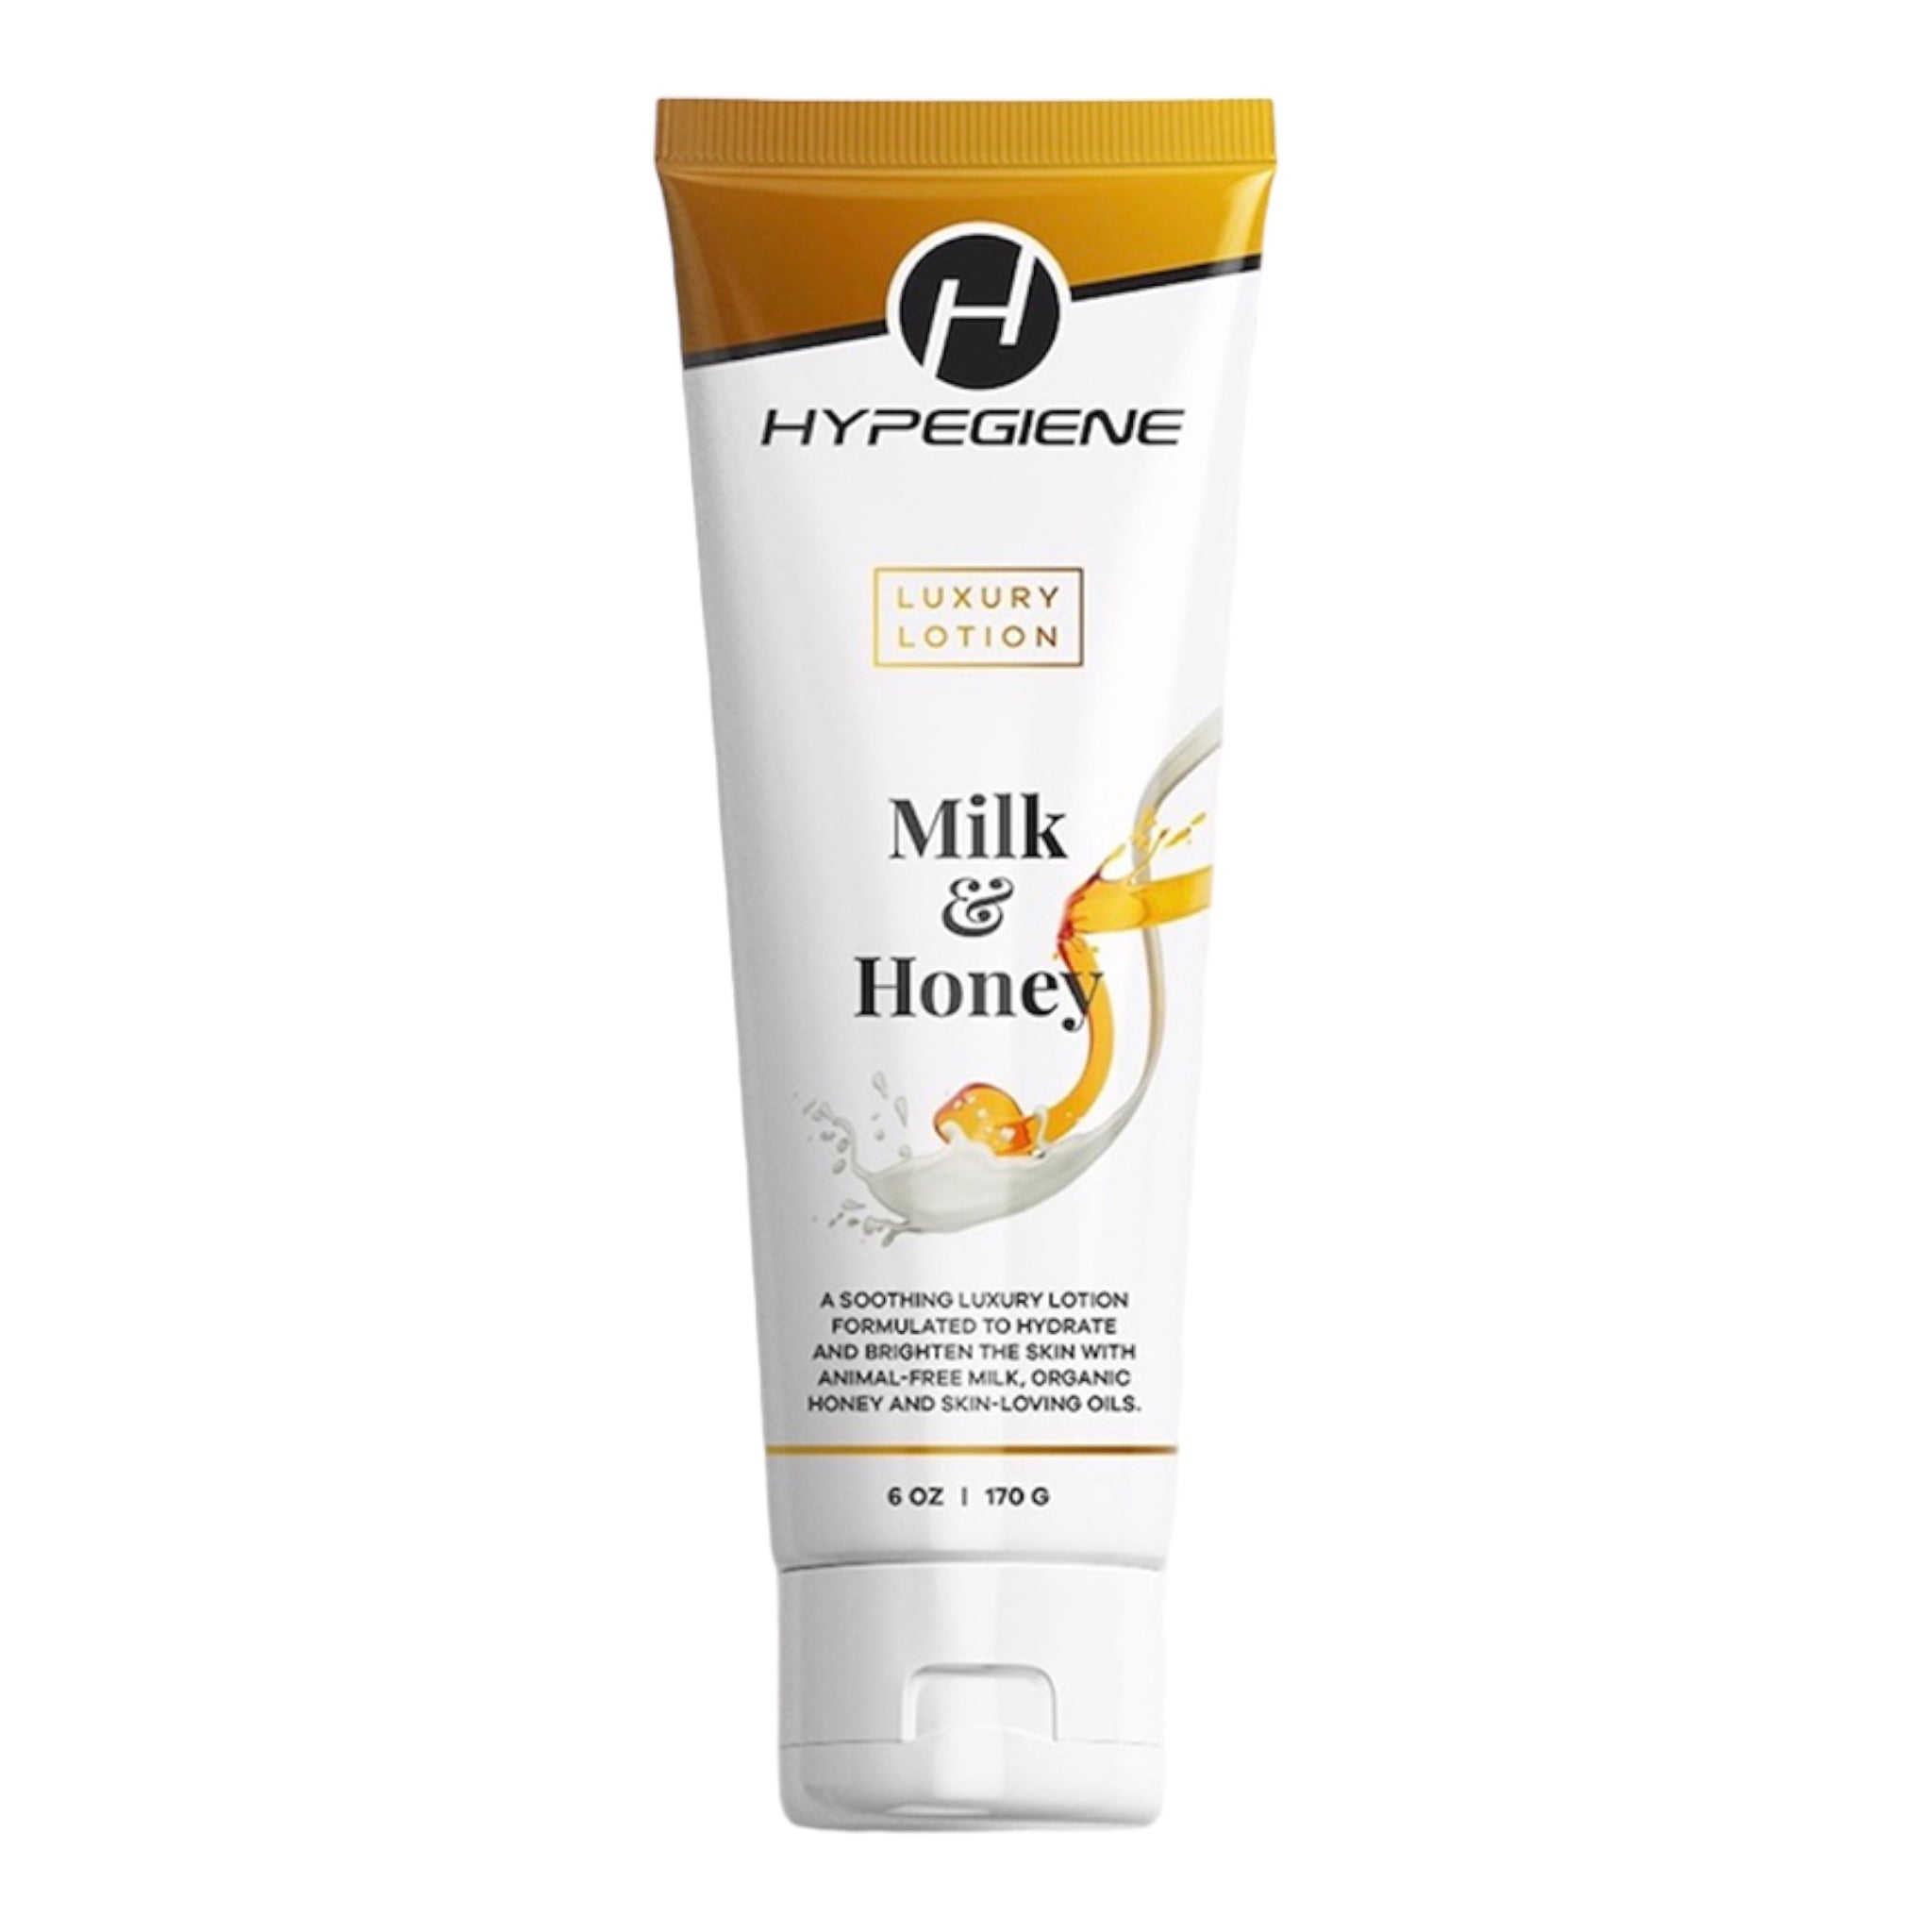 Hypegiene Milk & Honey Luxury Lotion